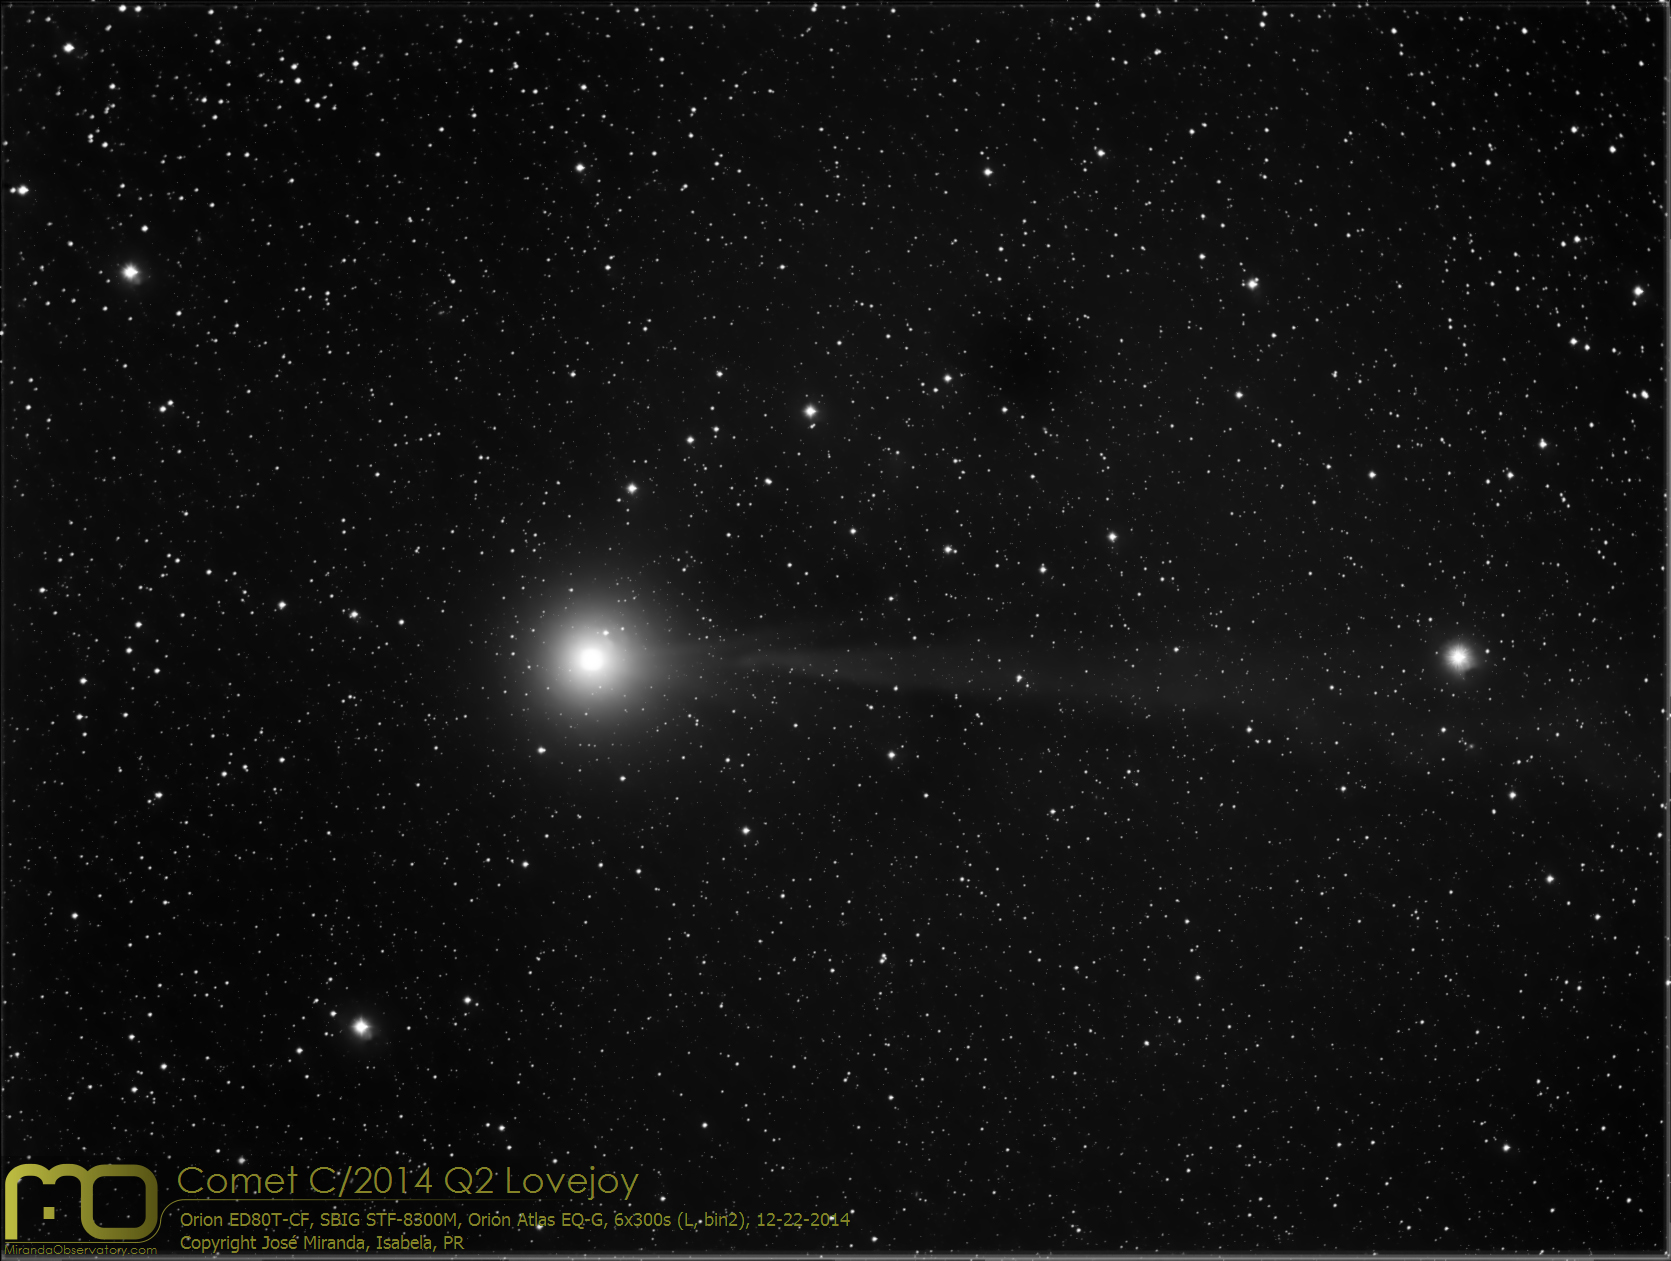 Cometa C/2014 Q2 Lovejoy, Copyright Jose Miranda